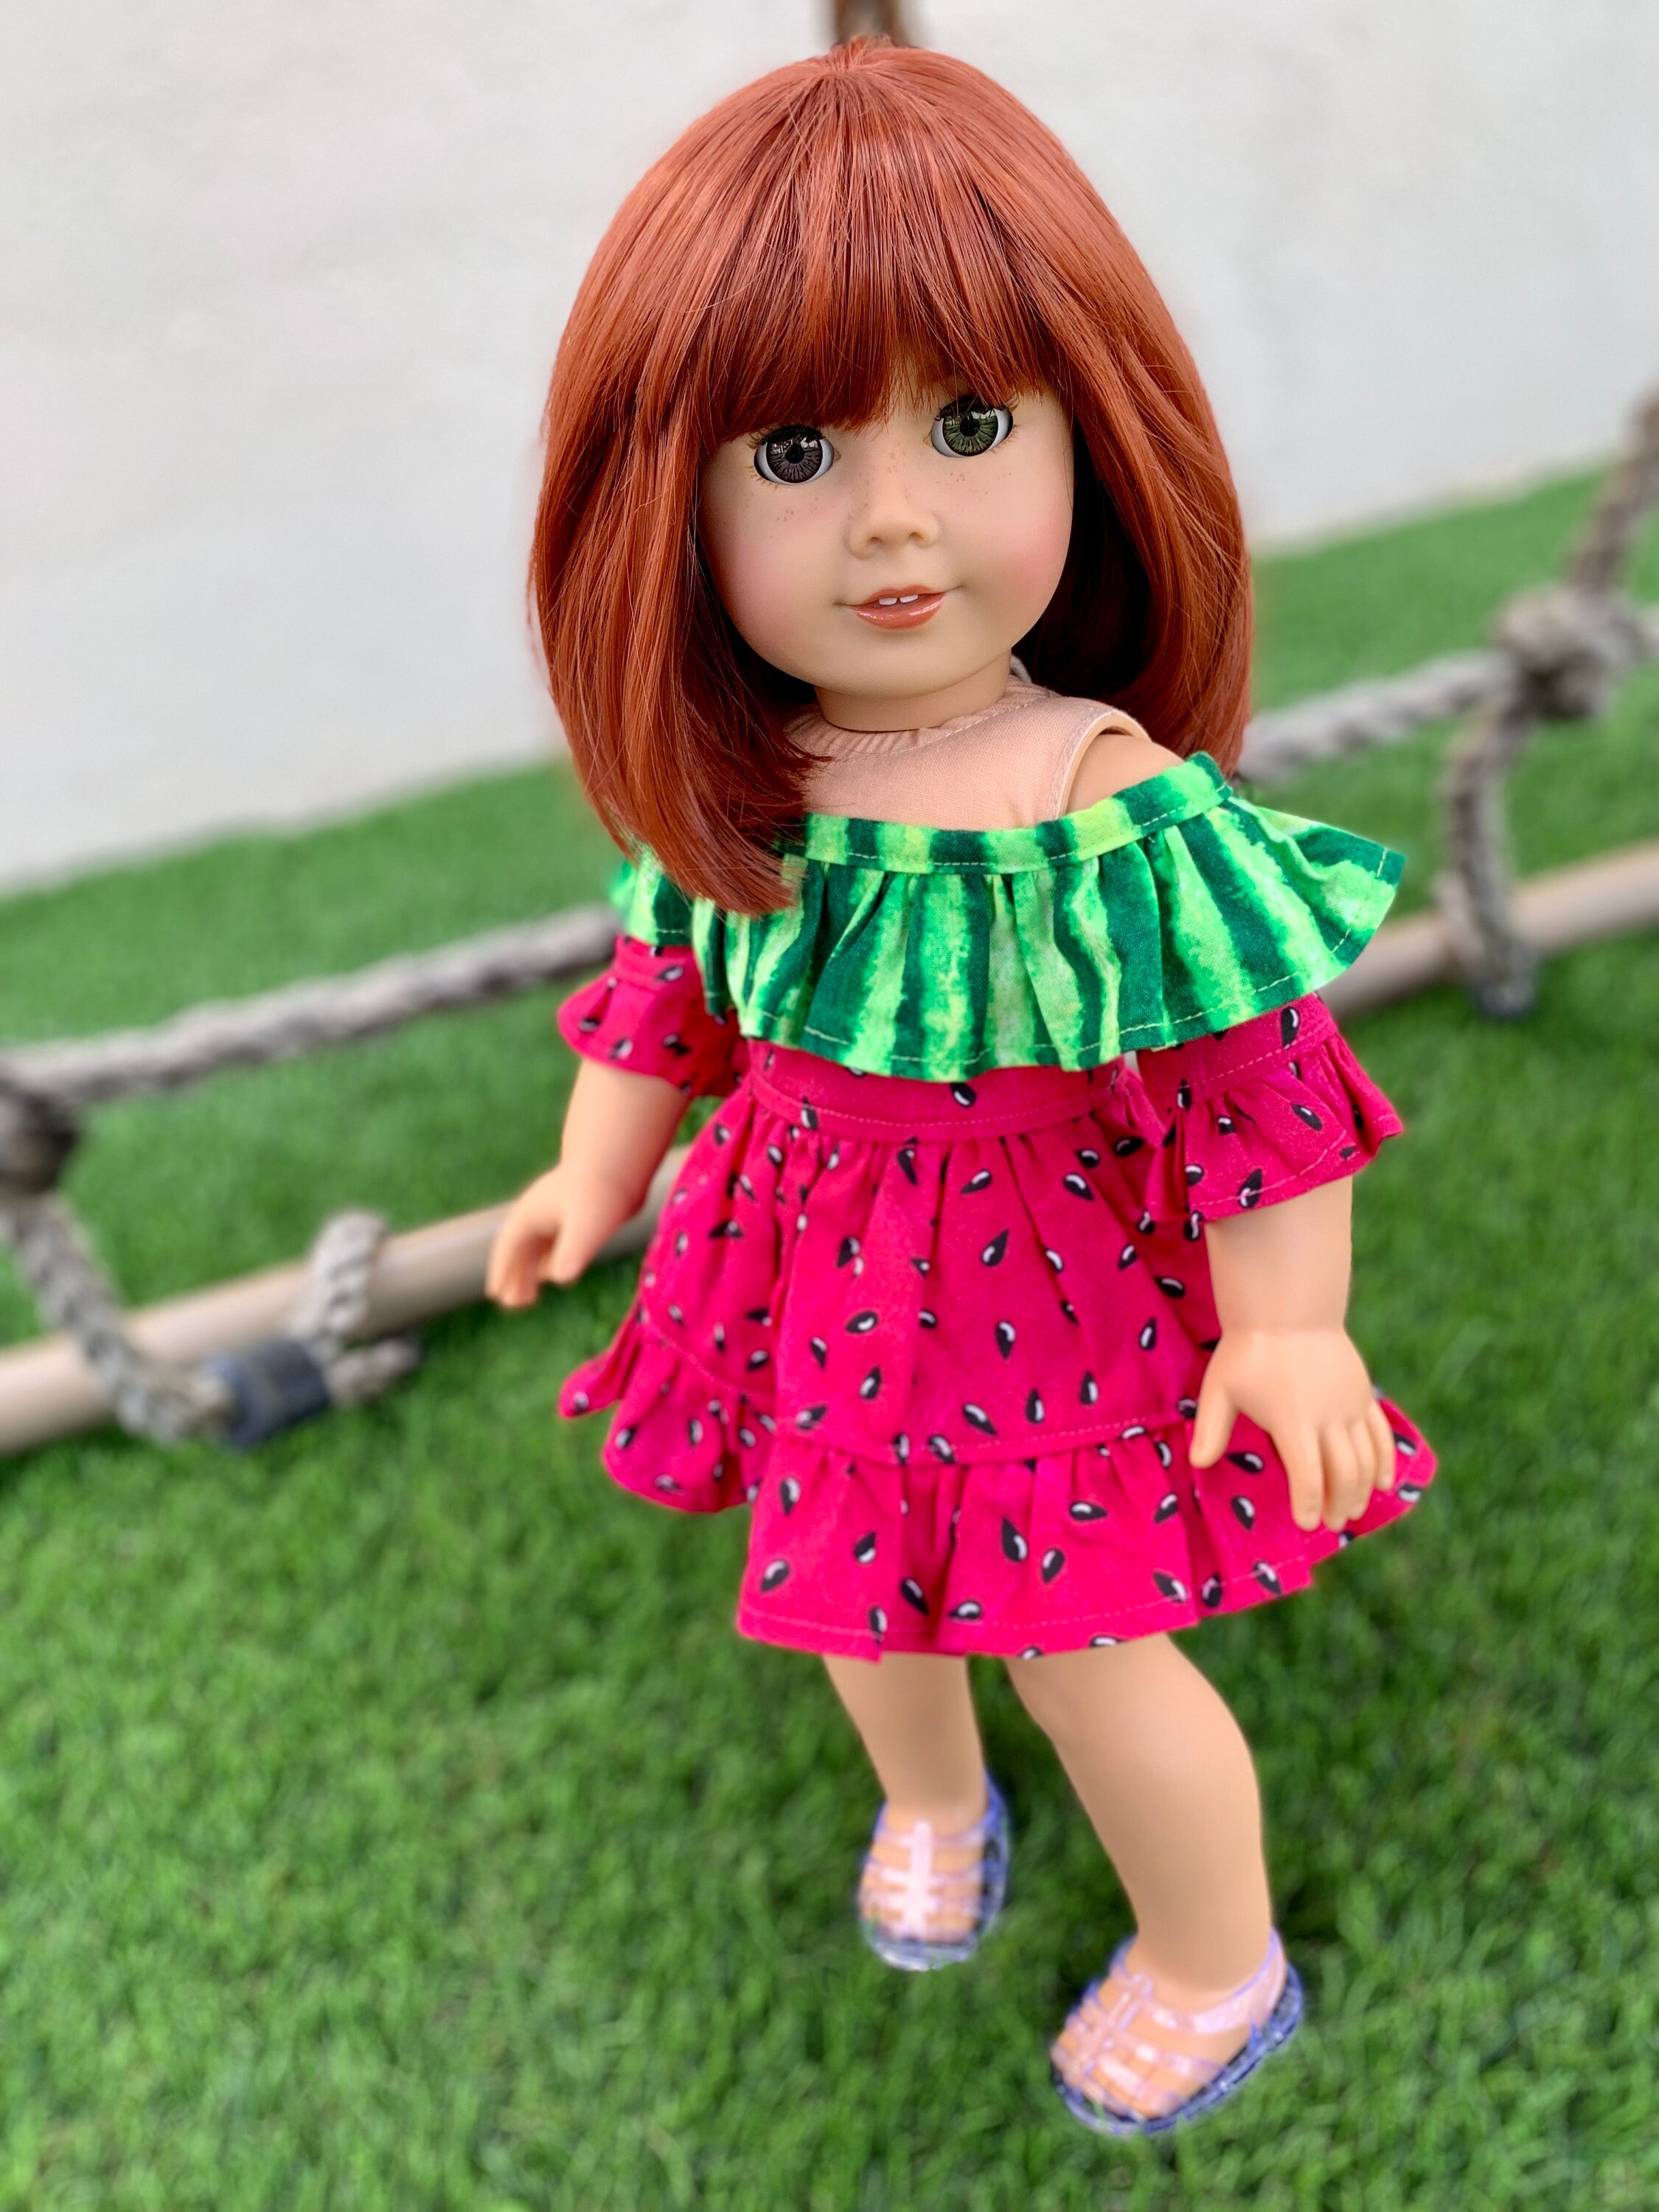 Custom doll wig for 18" American Girl Dolls -Heat & Tangle Resistant - fits 10-11" size of 18" dolls OG Blythe BJD Gotz dark Red bangs